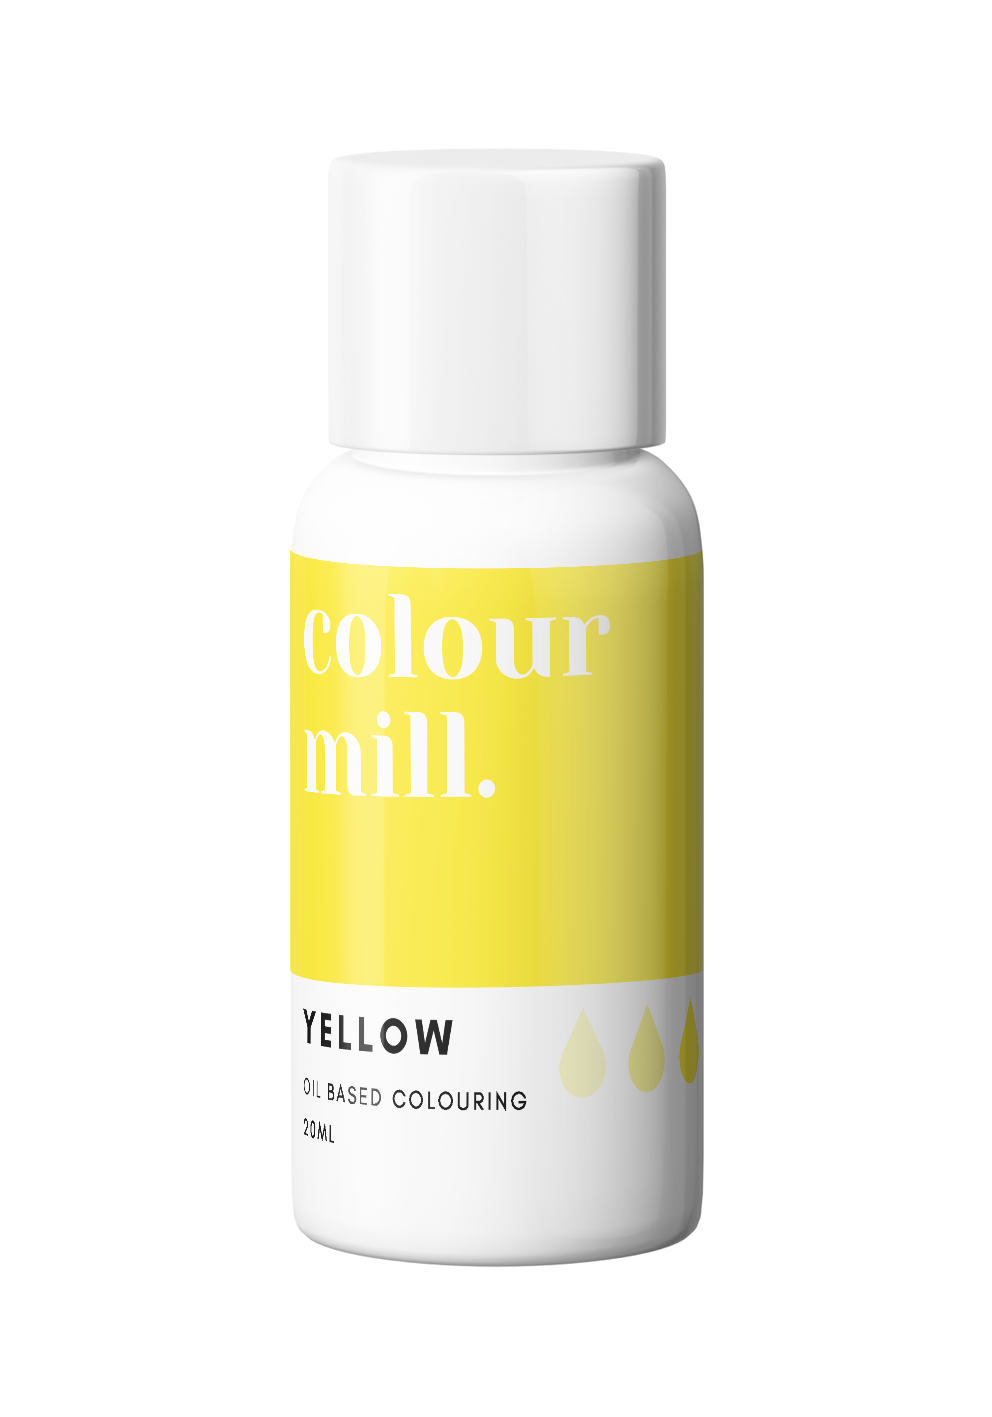 YELLOW - 20ml Colour Mill